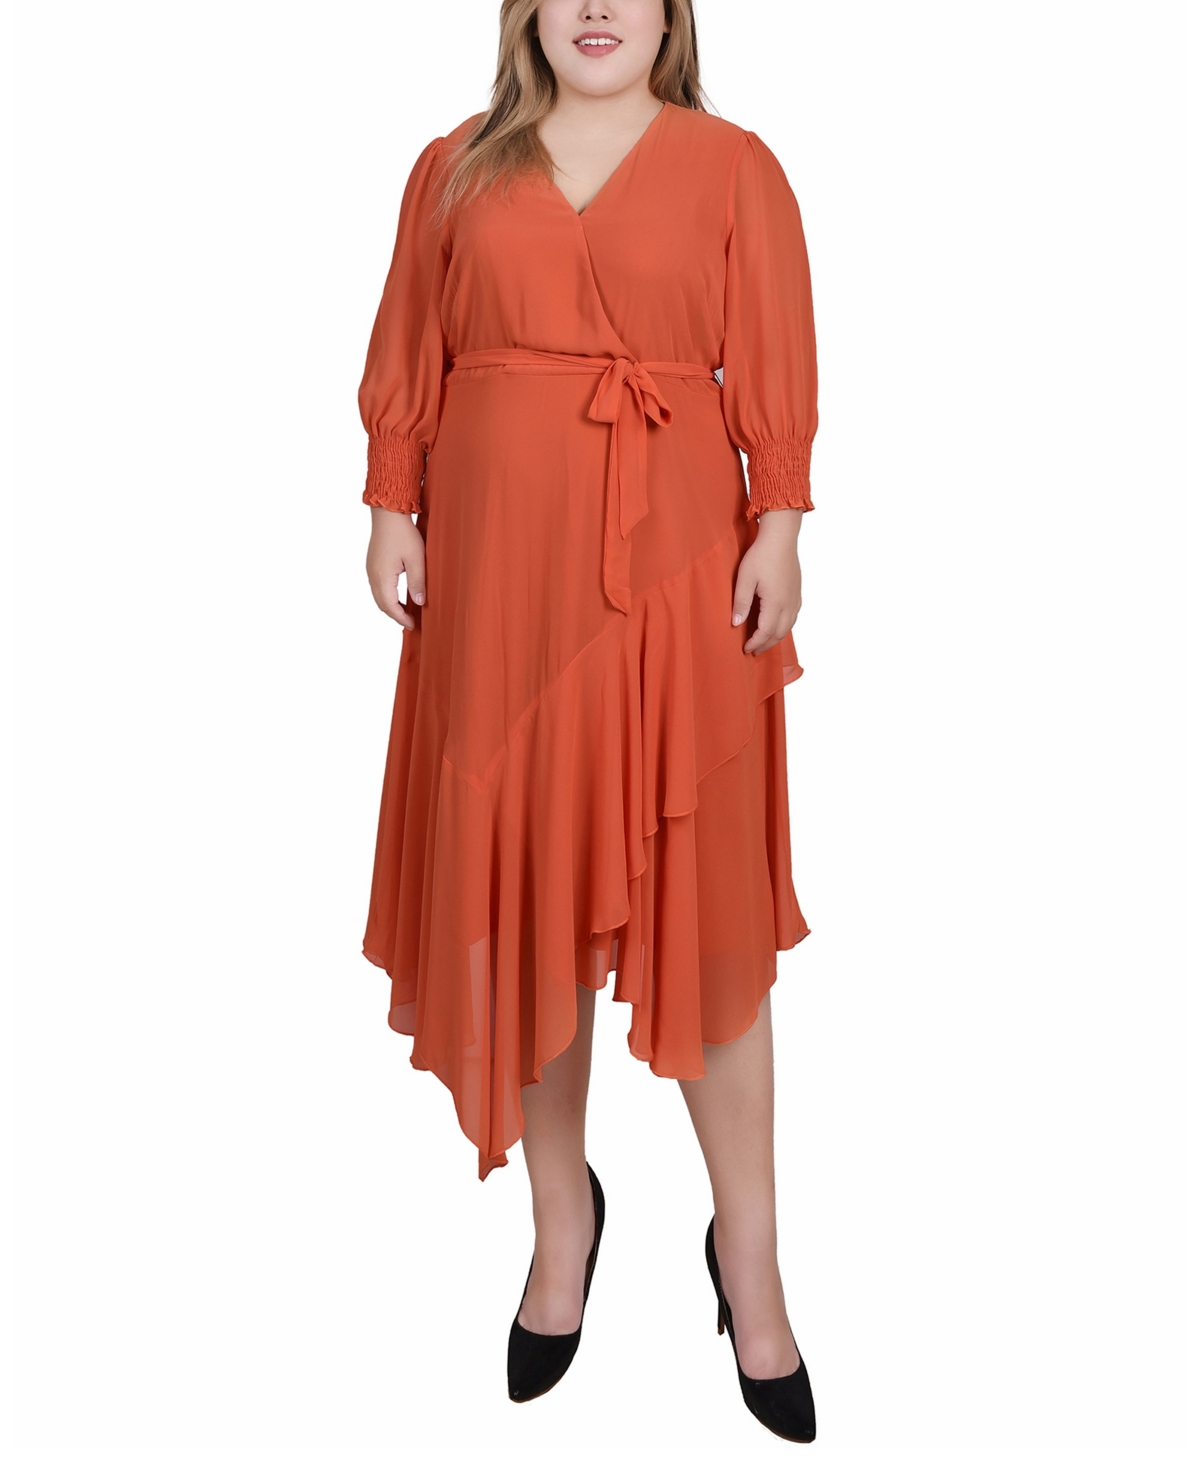 Buy Boardwalk Empire Inspired Dresses Ny Collection Plus Size 34 Sleeve Belted Chiffon Handkerchief Hem Dress - Orange Rust $27.90 AT vintagedancer.com